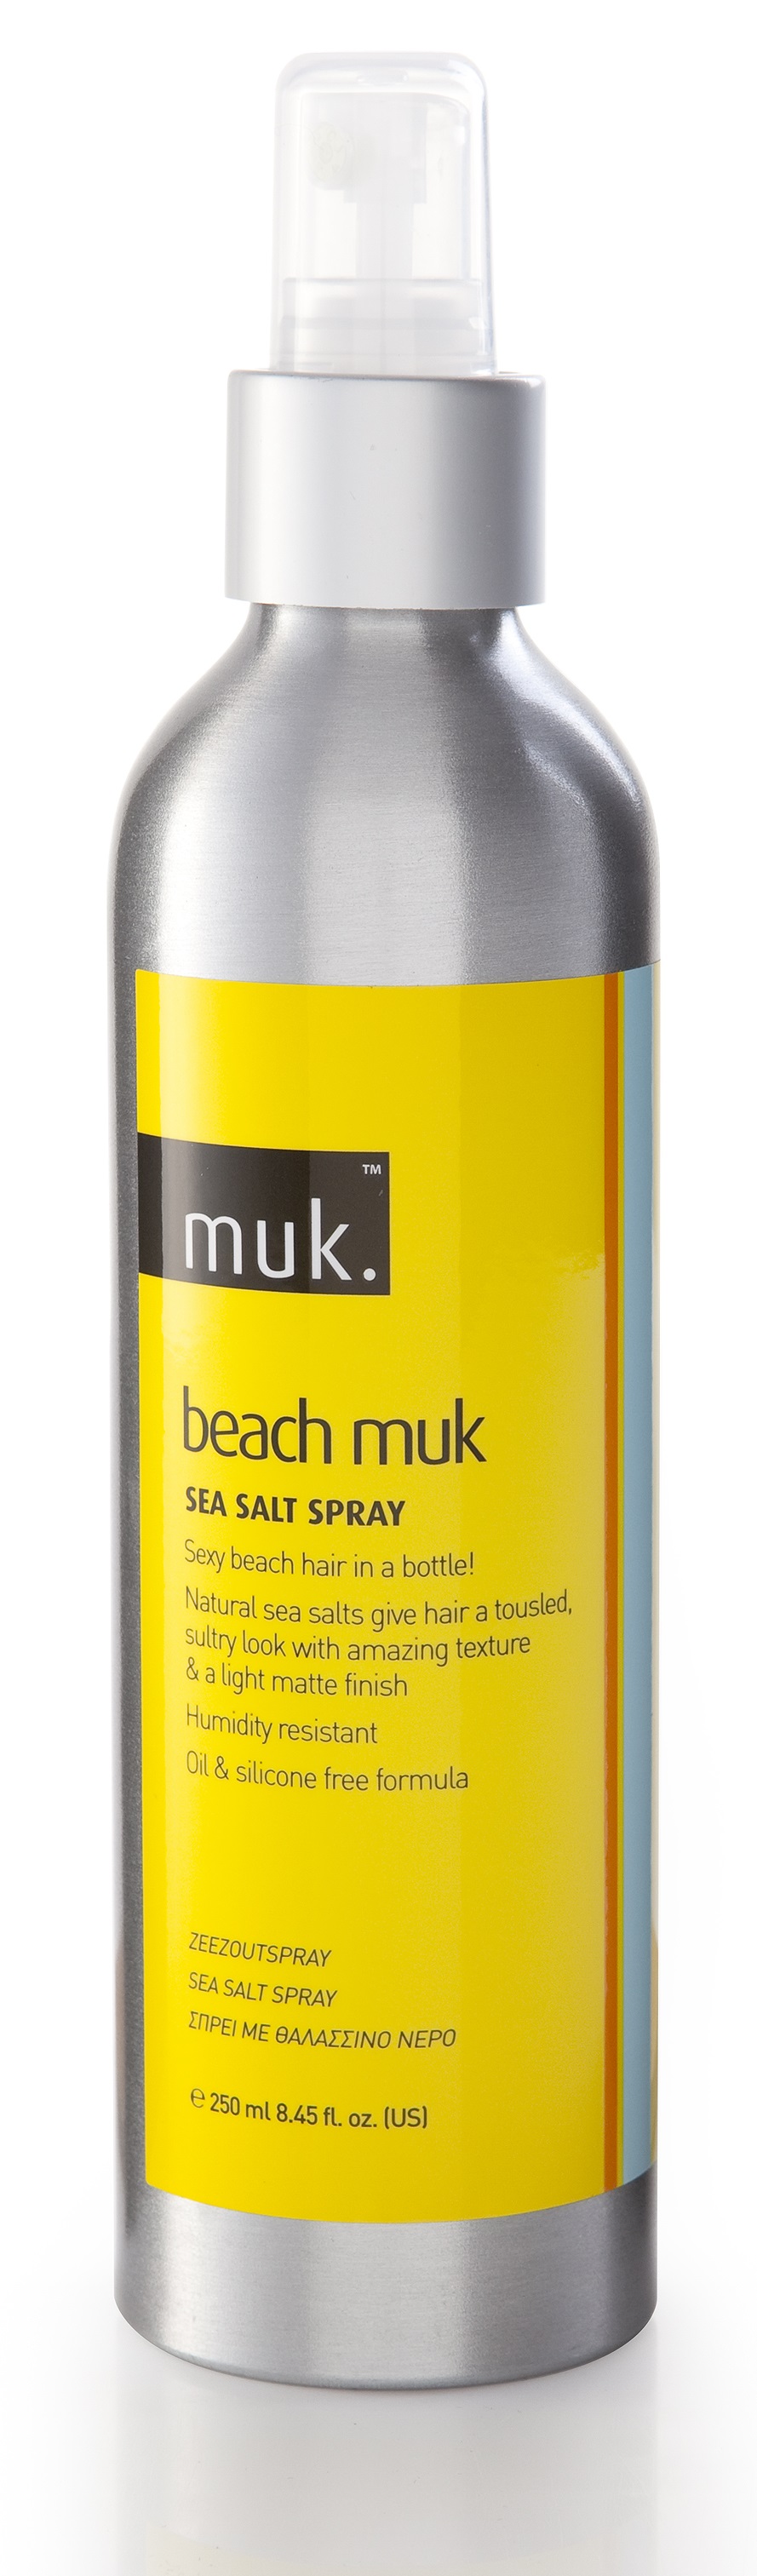 Muk Beach Sea Salt Spray 250ml